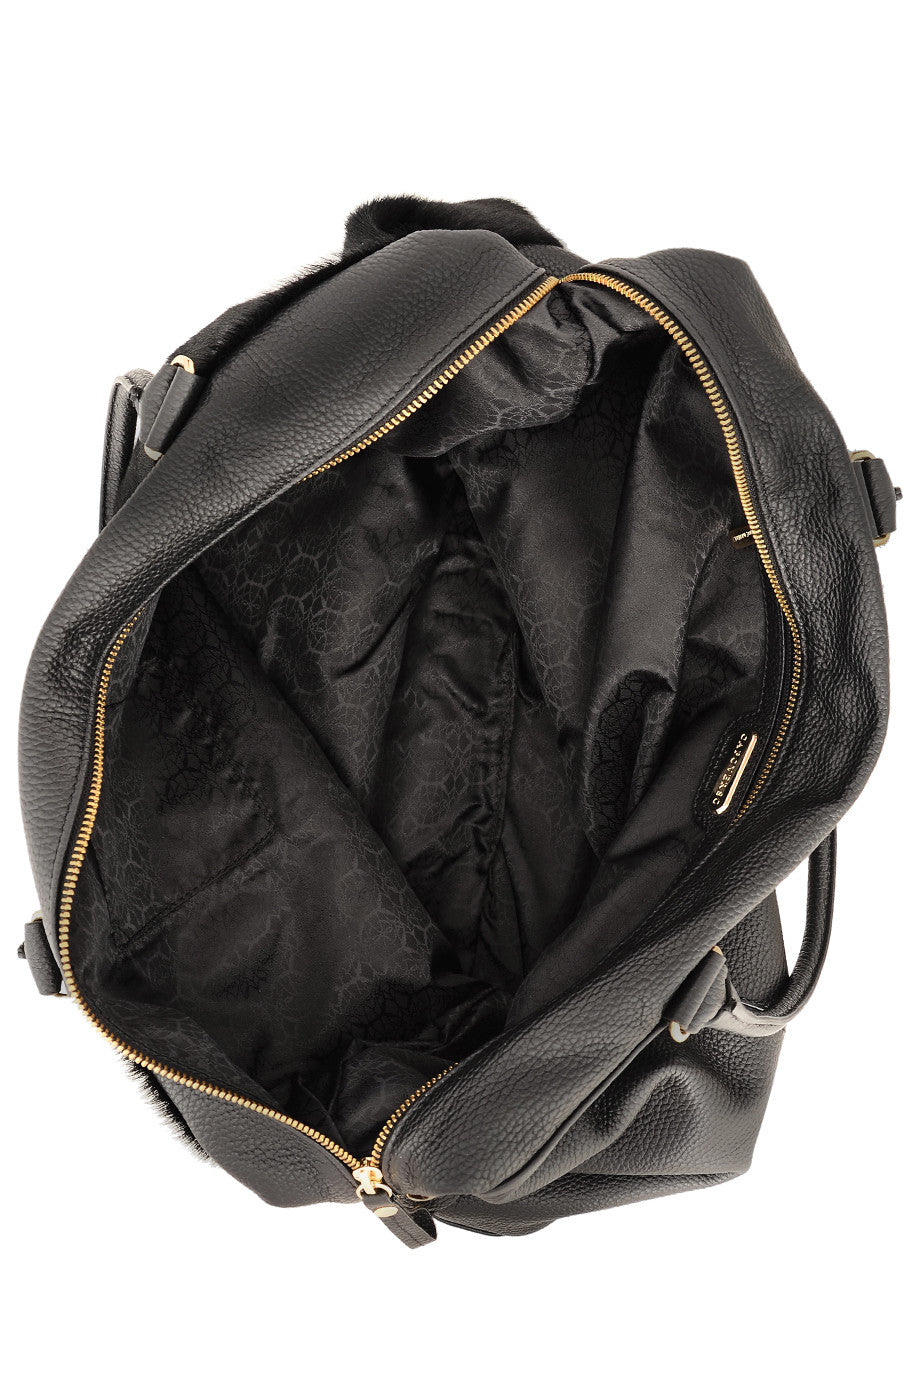 CAPOVERSO CAVALLINO Black Leather Bag with Pony Hair